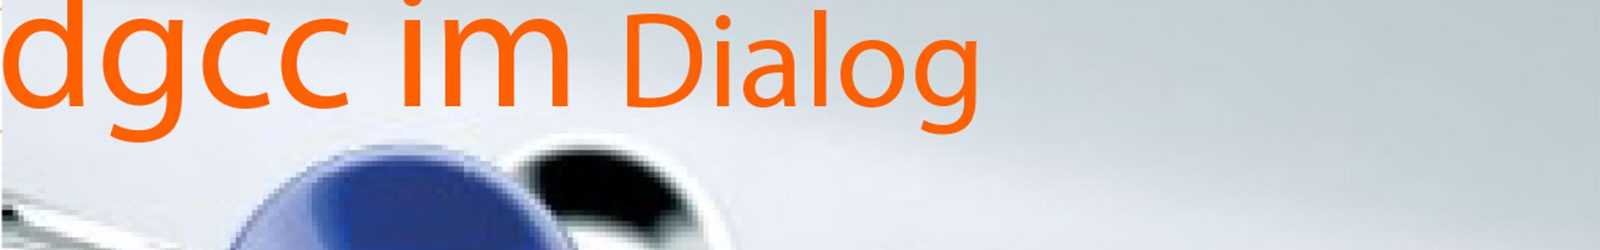 dgcc im Dialog – 06.11.2019 in Berlin